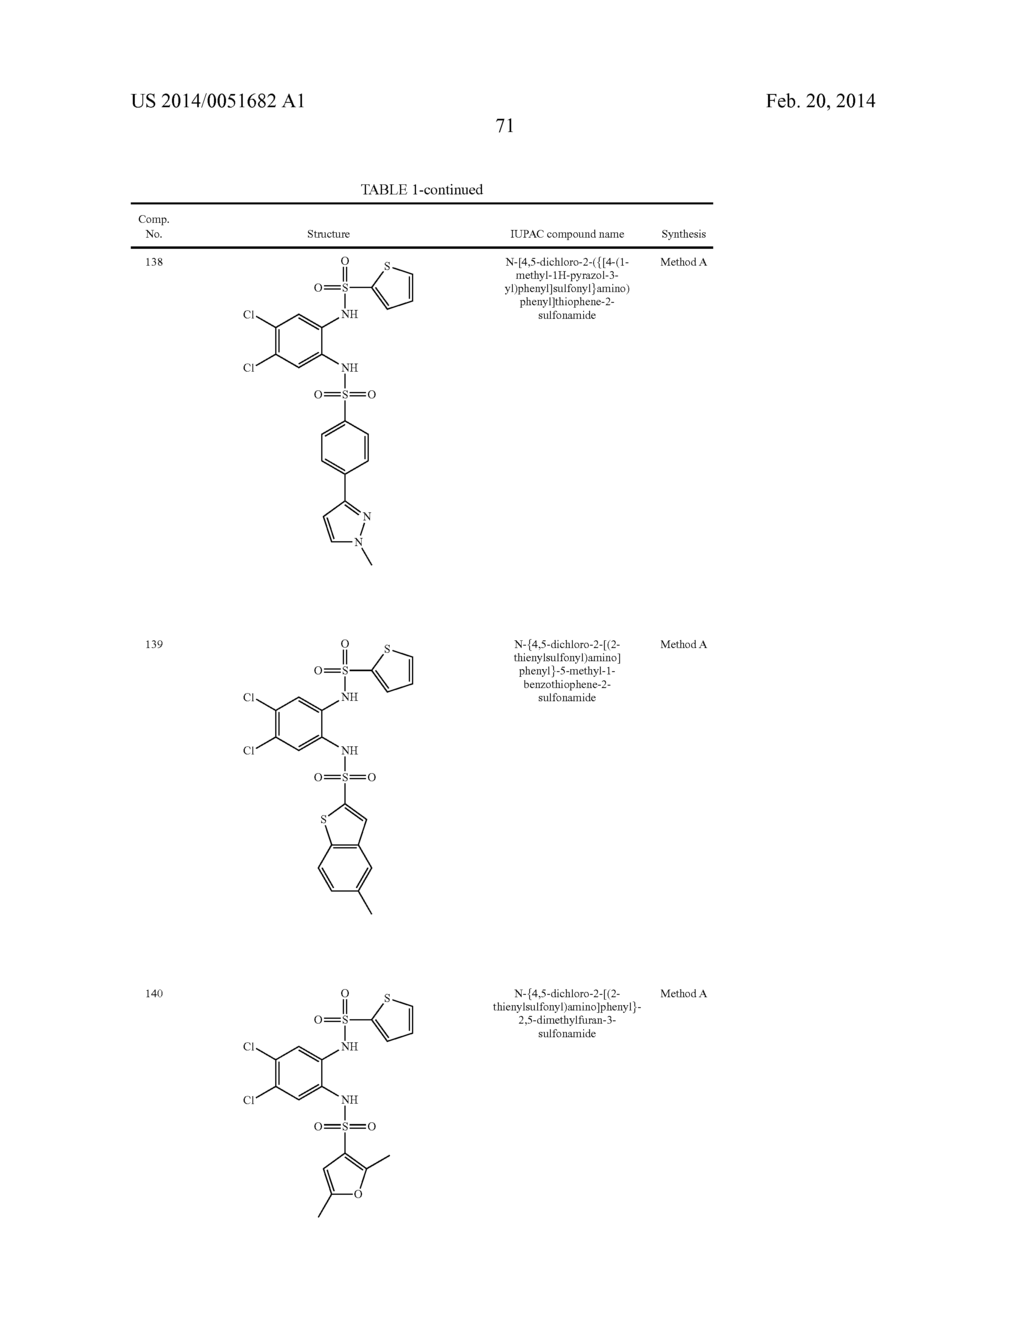 NOVEL 1,2- BIS-SULFONAMIDE DERIVATIVES AS CHEMOKINE RECEPTOR MODULATORS - diagram, schematic, and image 72